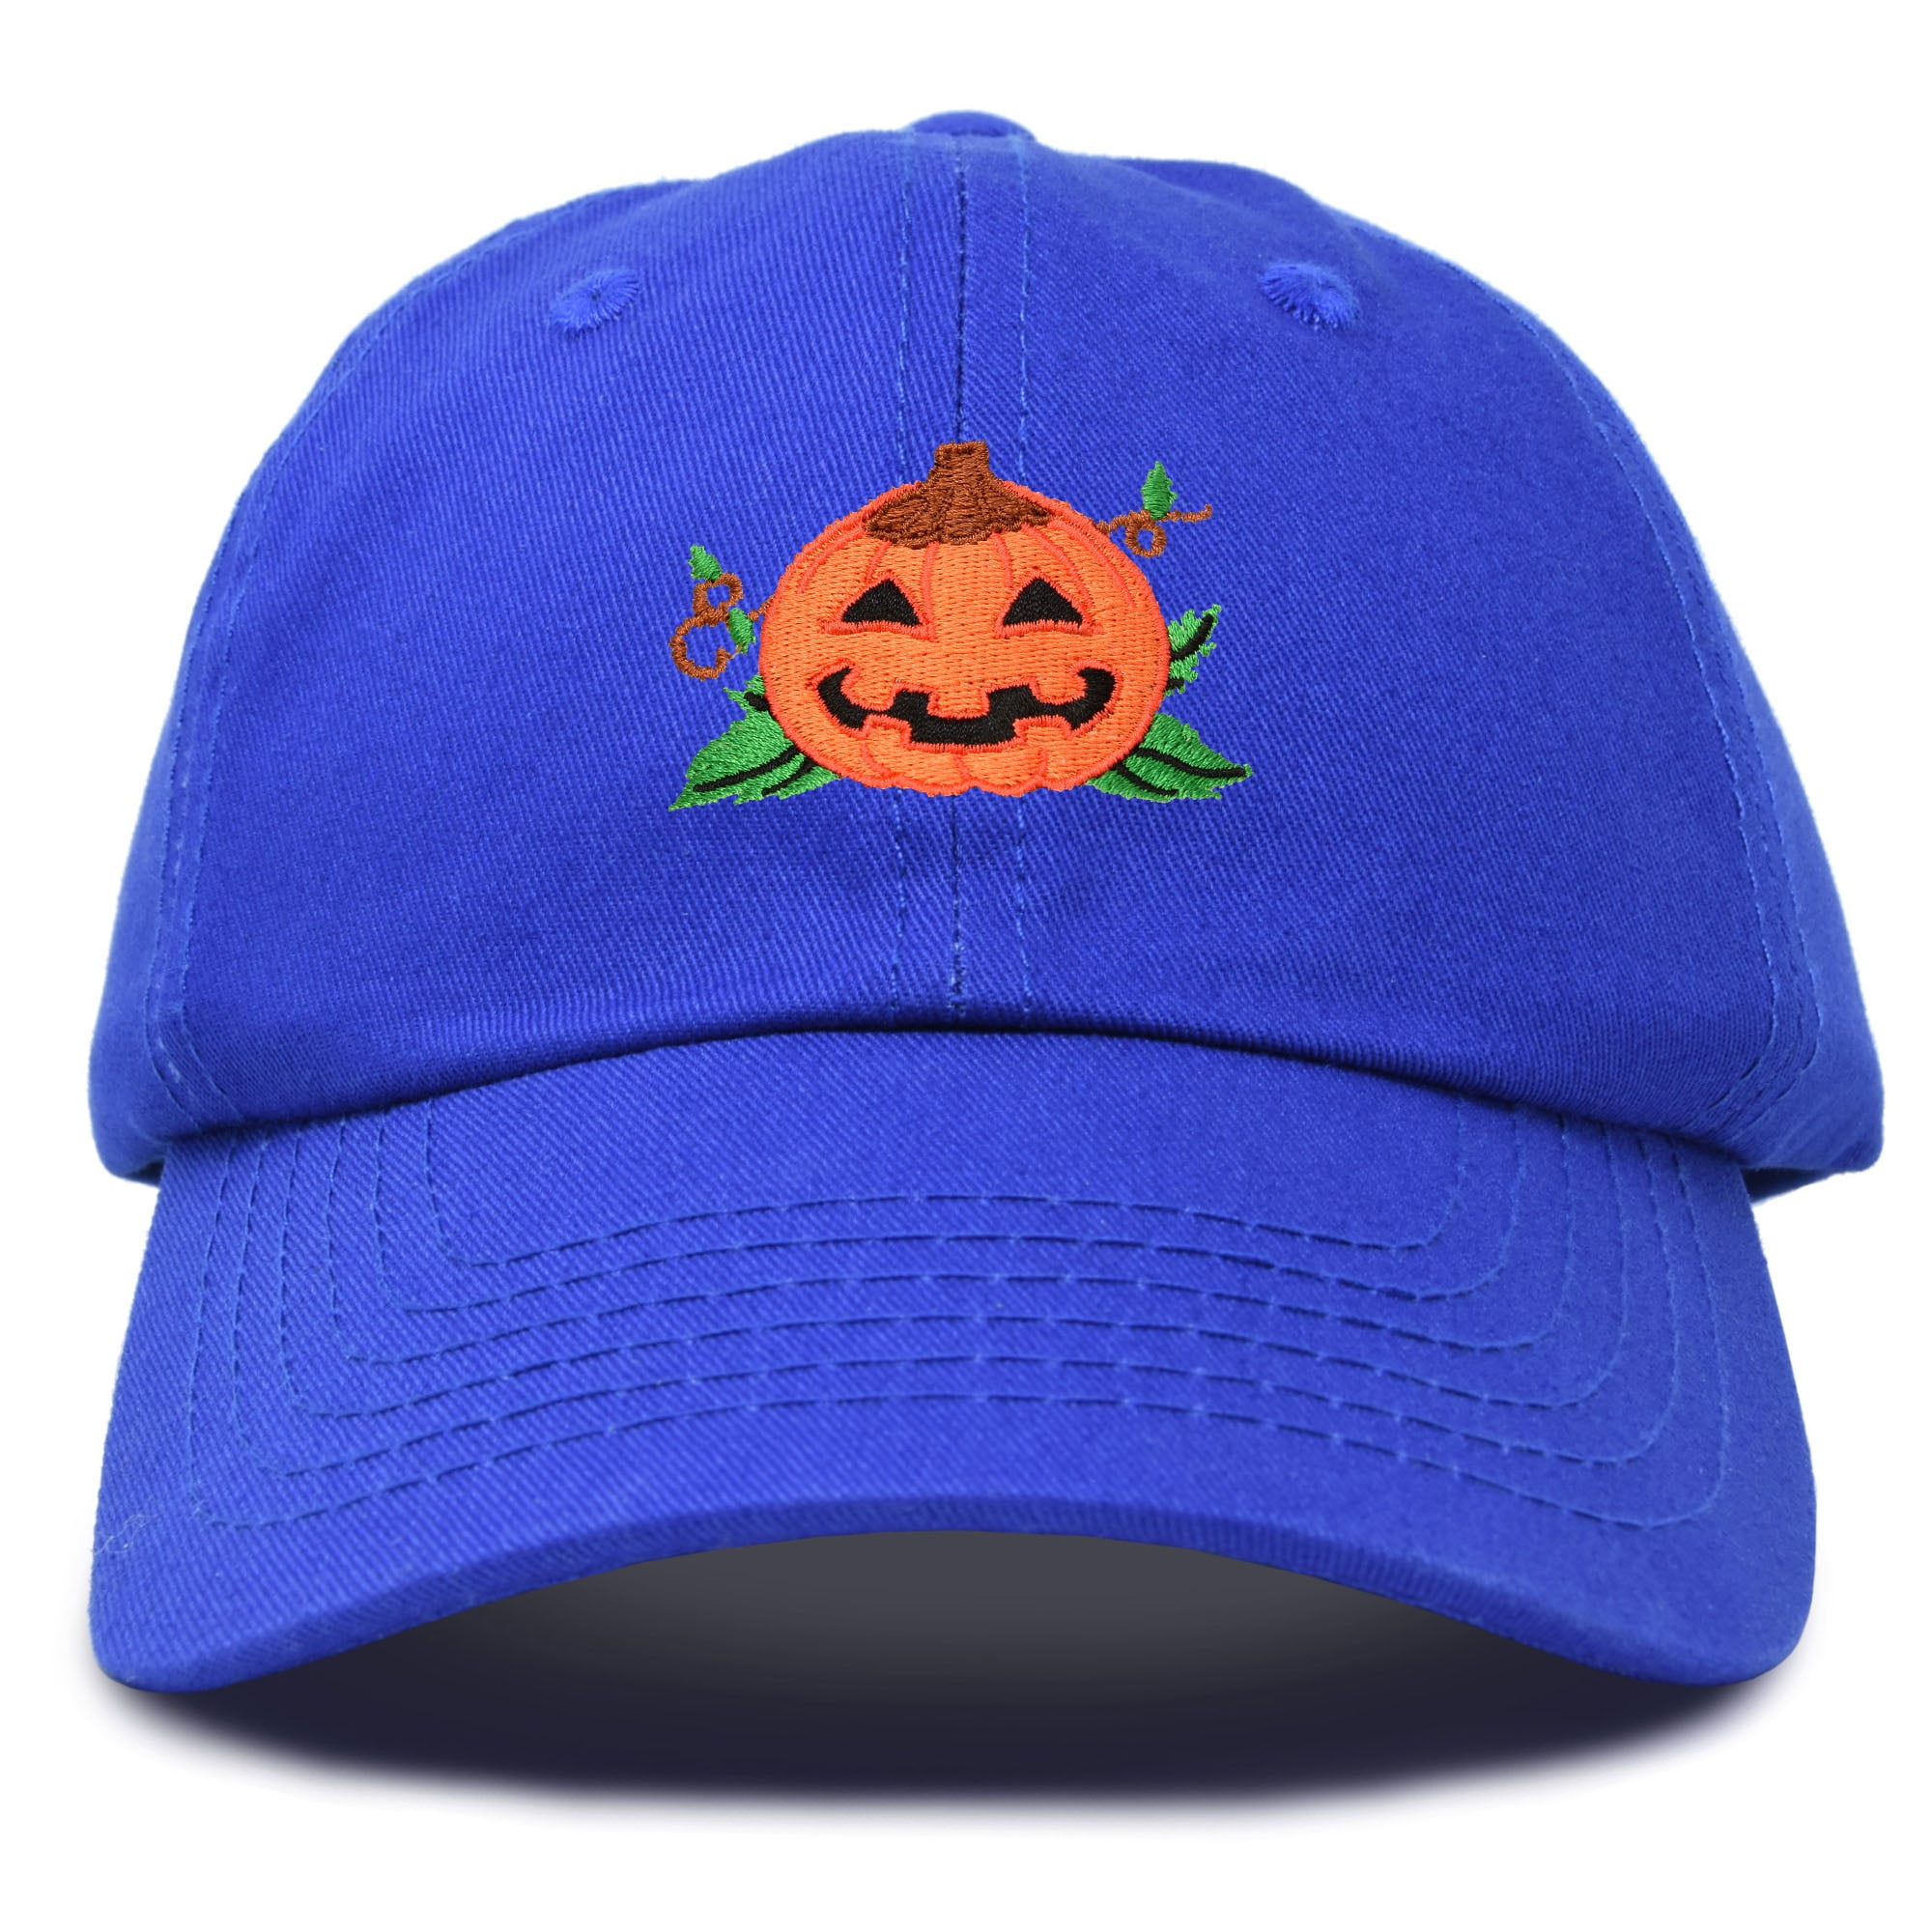 Unisex Scrub CapOR Hat for men and women made from Halloween jack-o-lantern happy pumpkin fabric